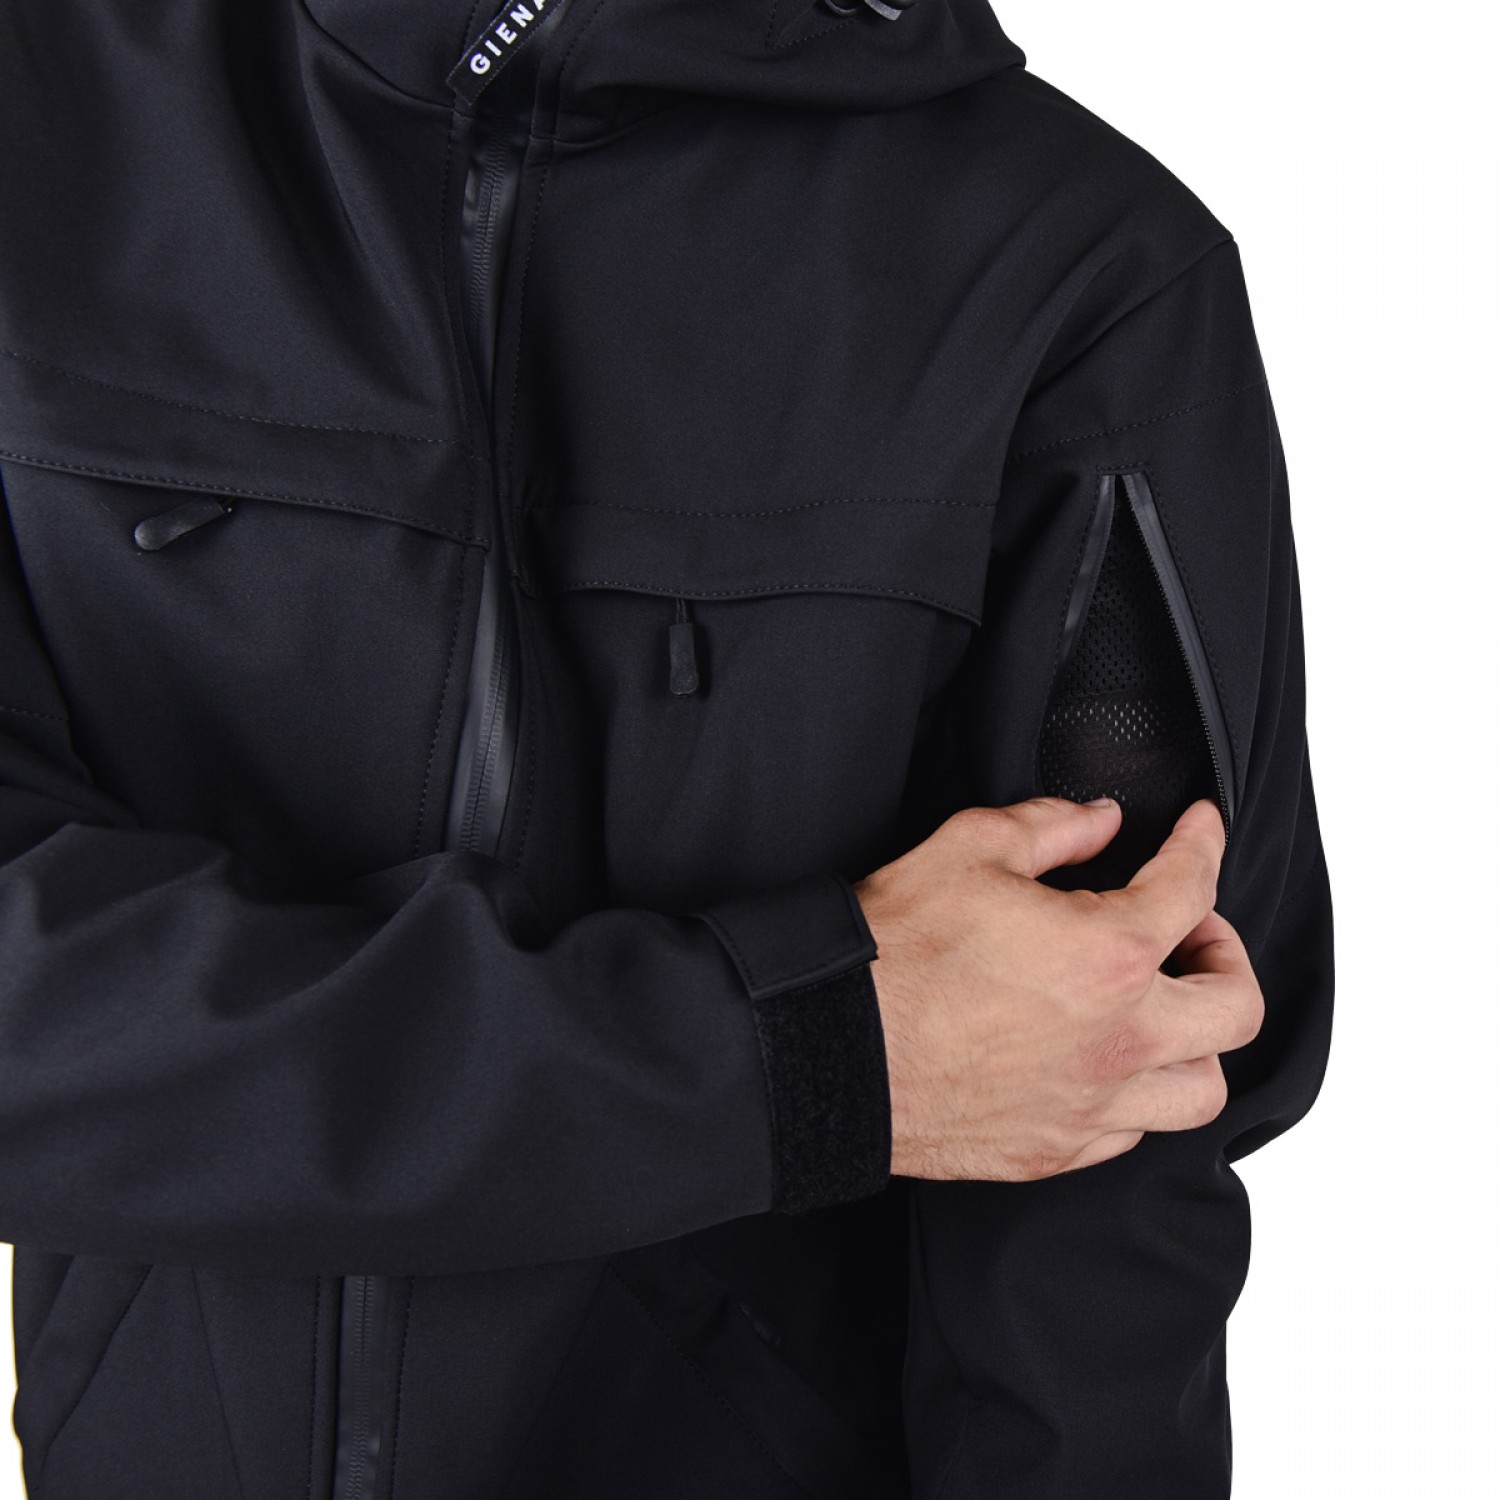 Specter jacket — Black